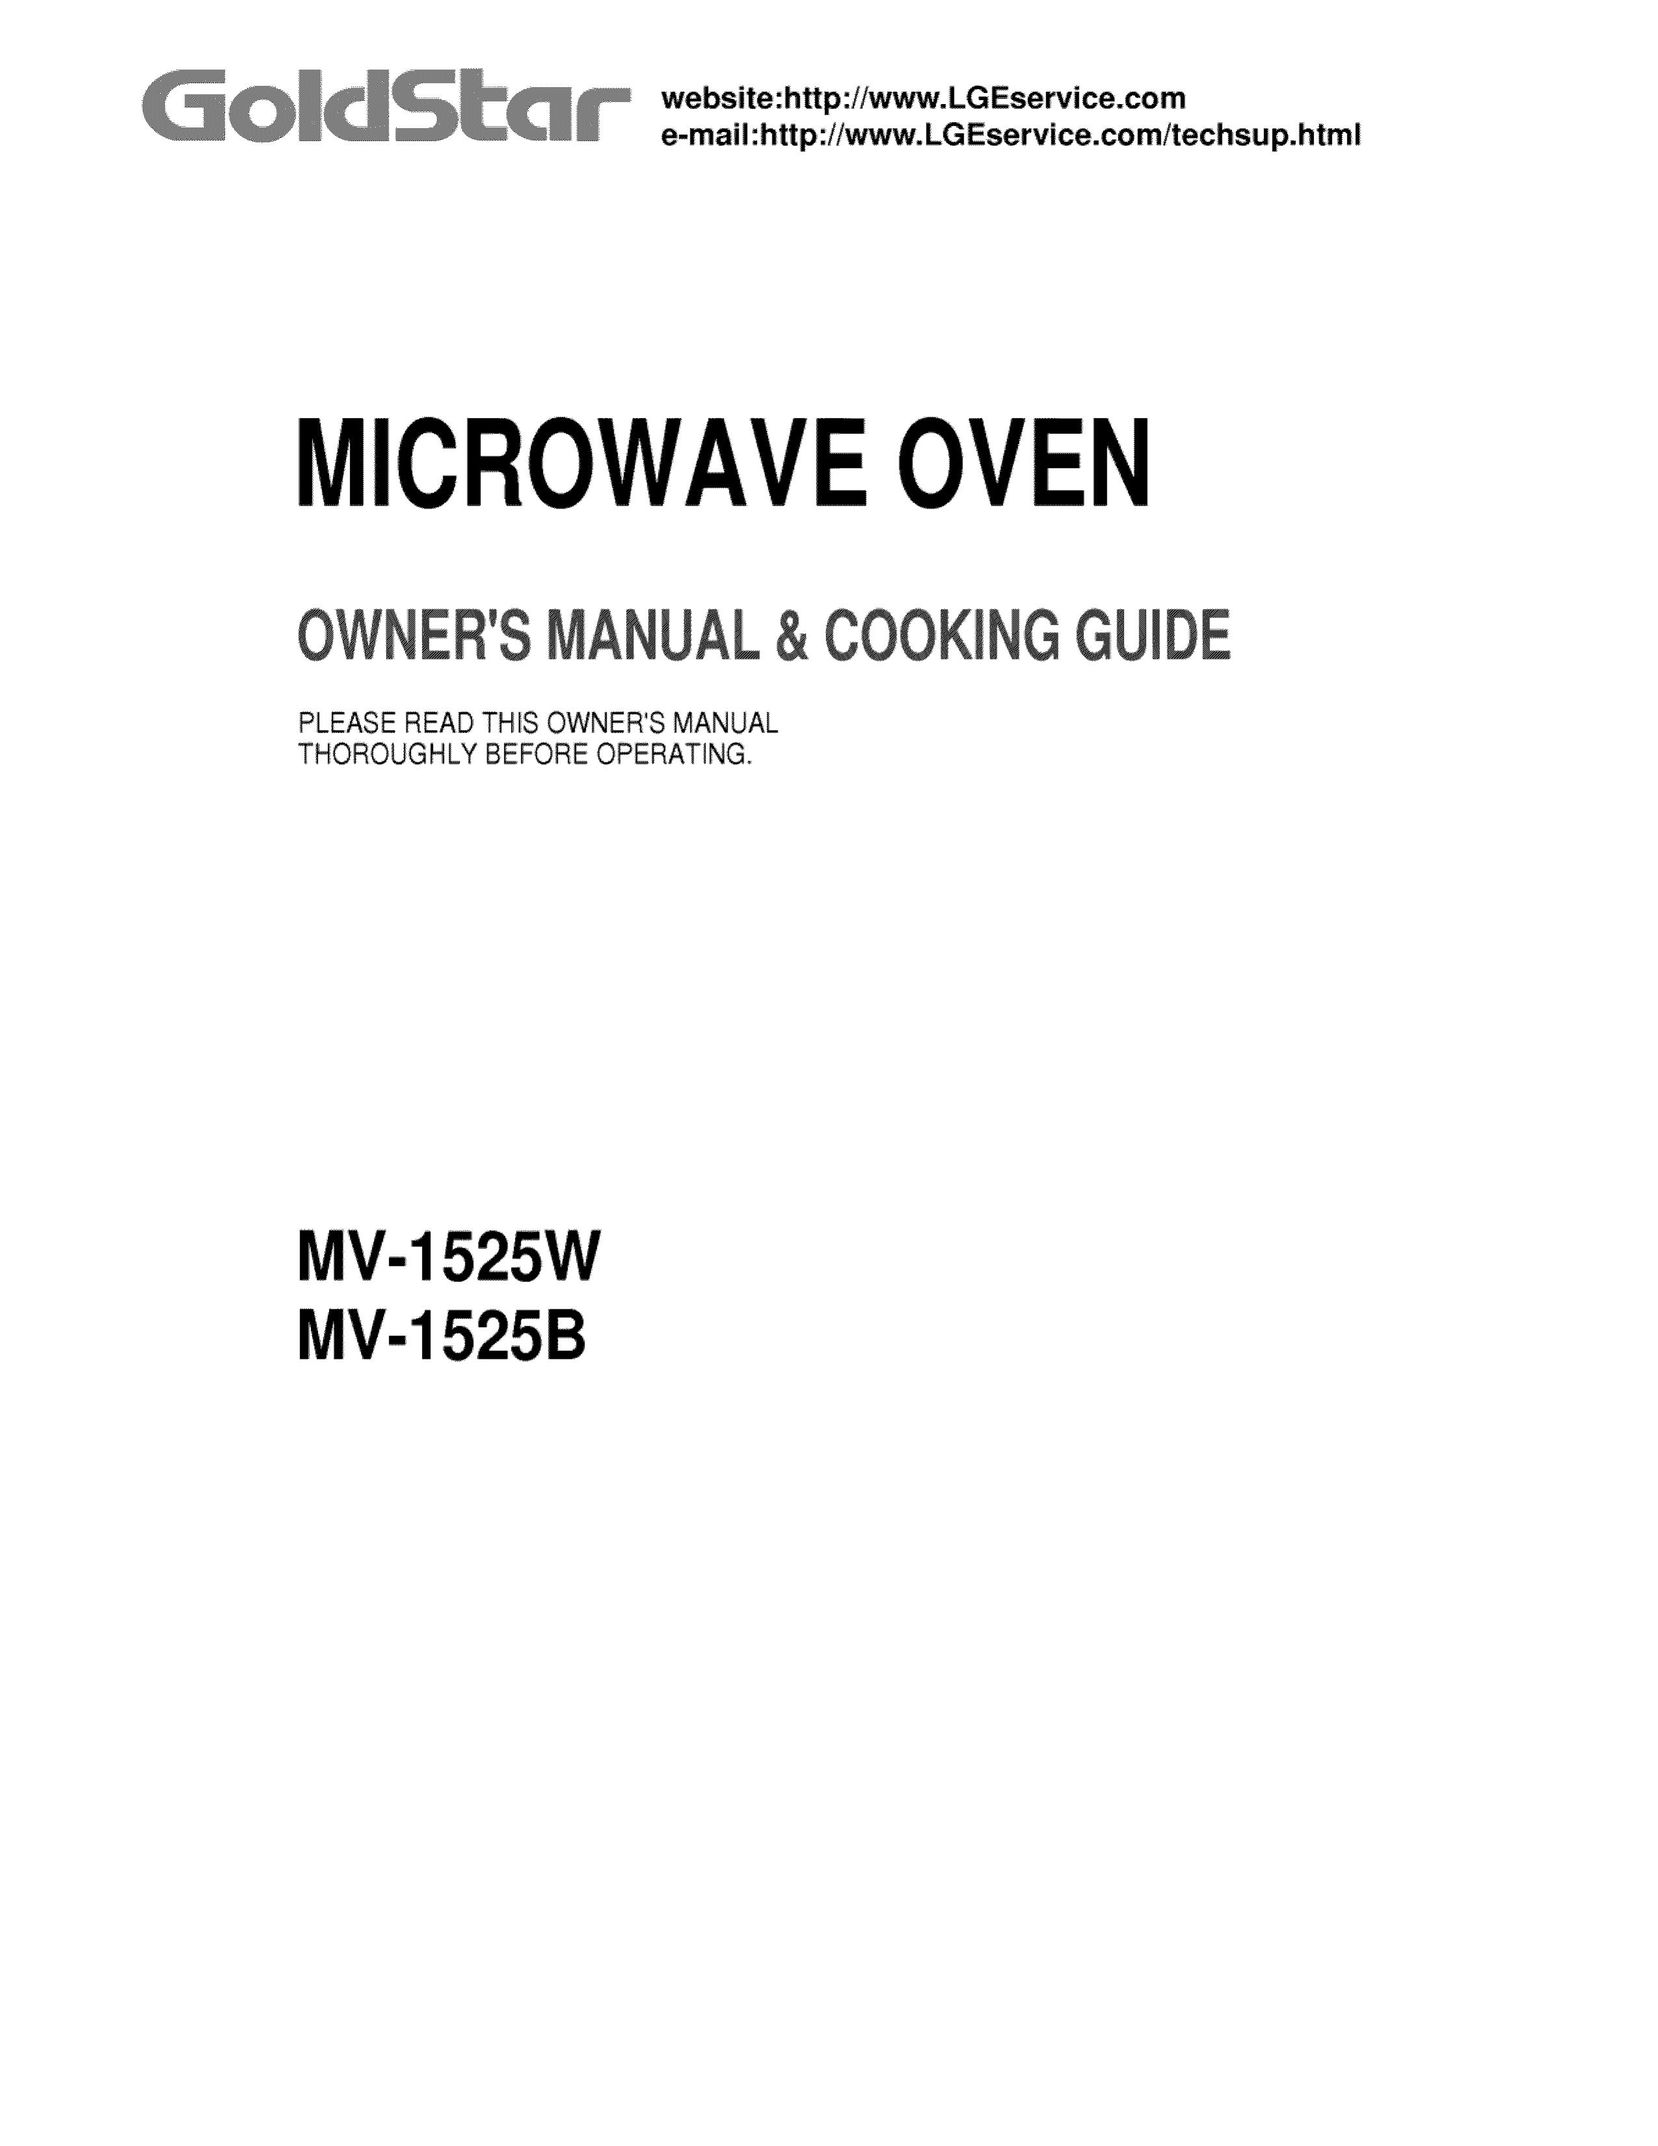 Goldstar MV-1525B Microwave Oven User Manual